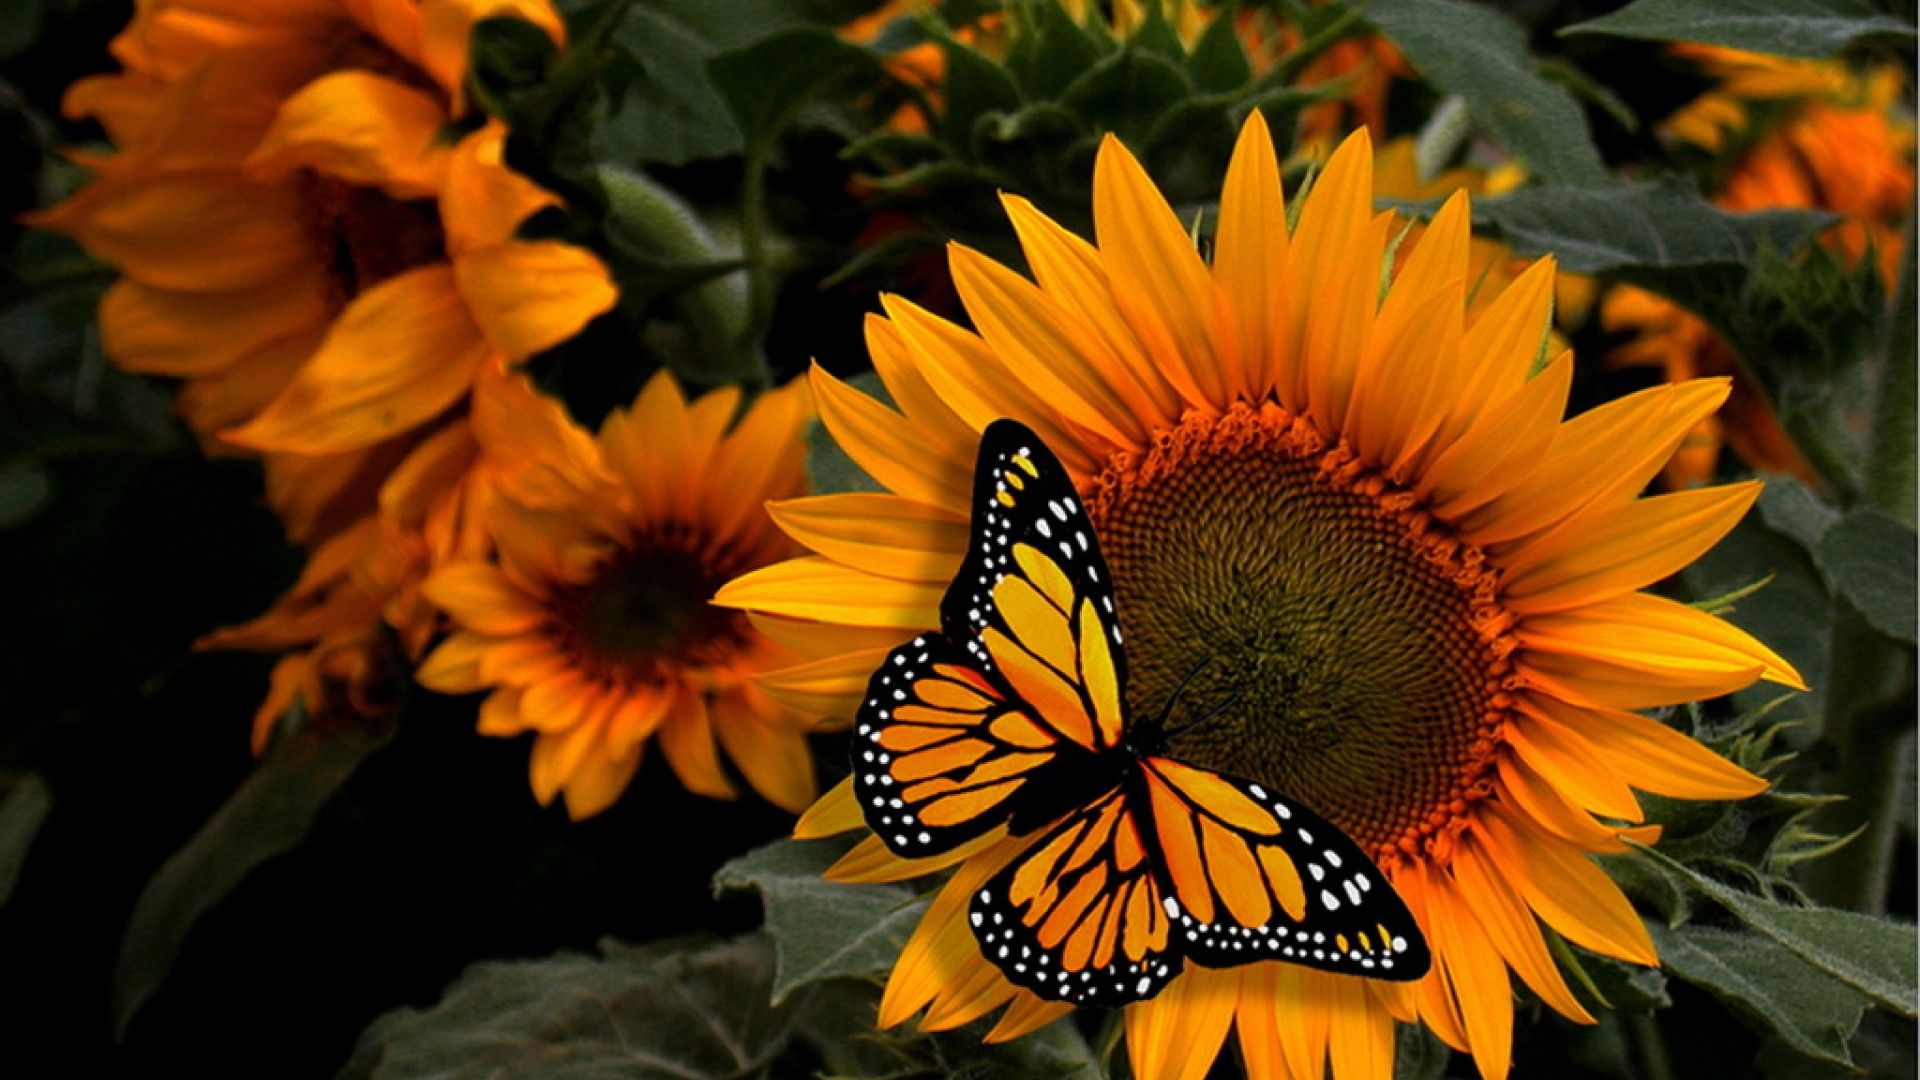 0sunflower Butterfly Wallpaper Flores Do Sol